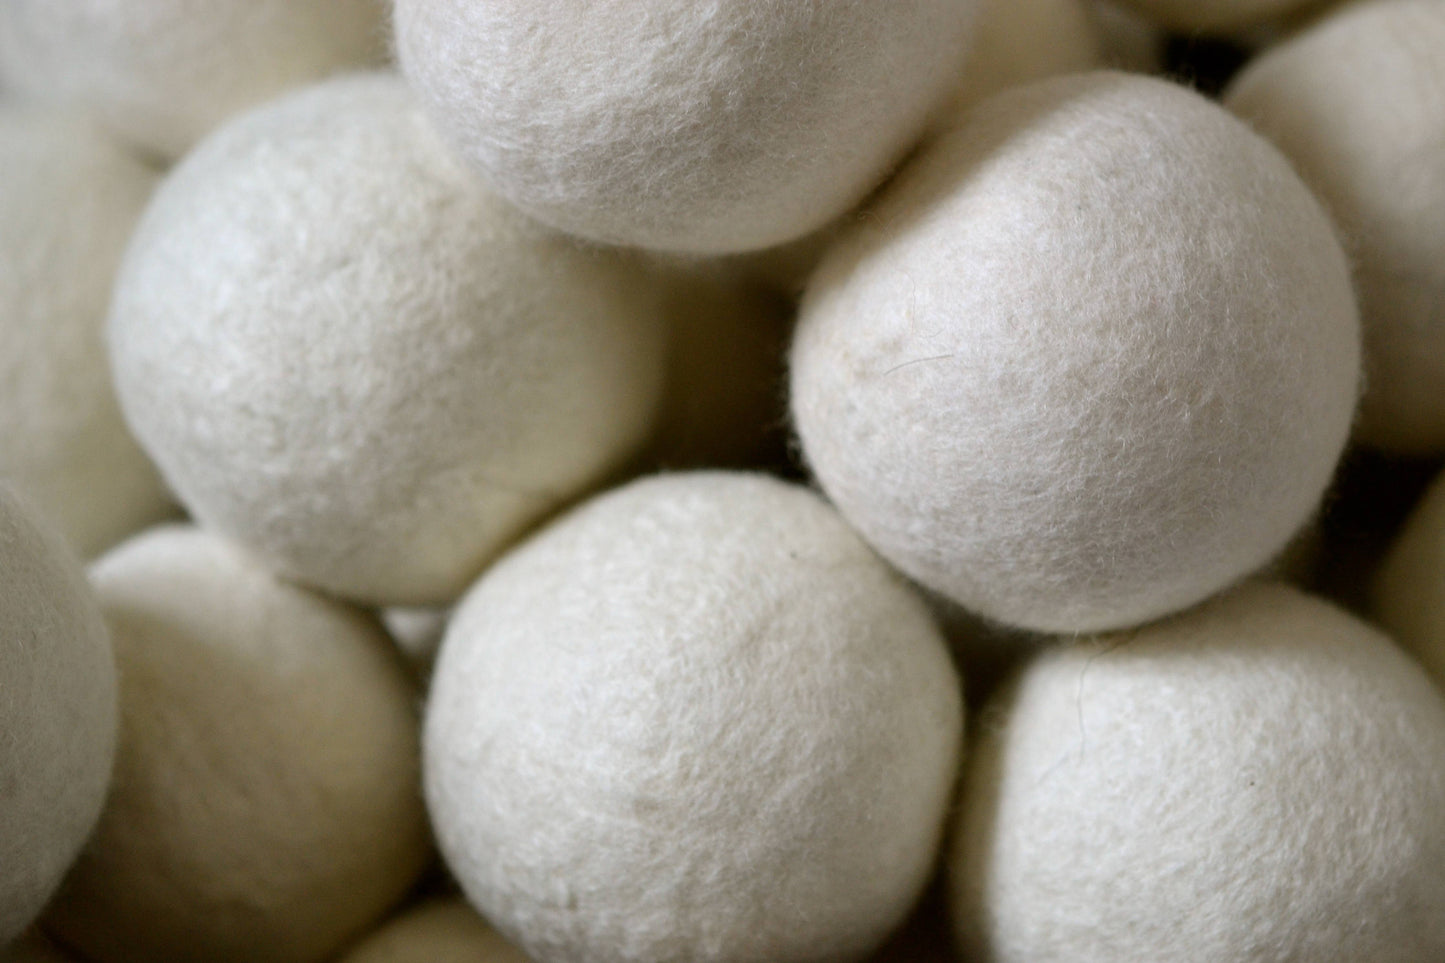 Wool Dryer Balls - White